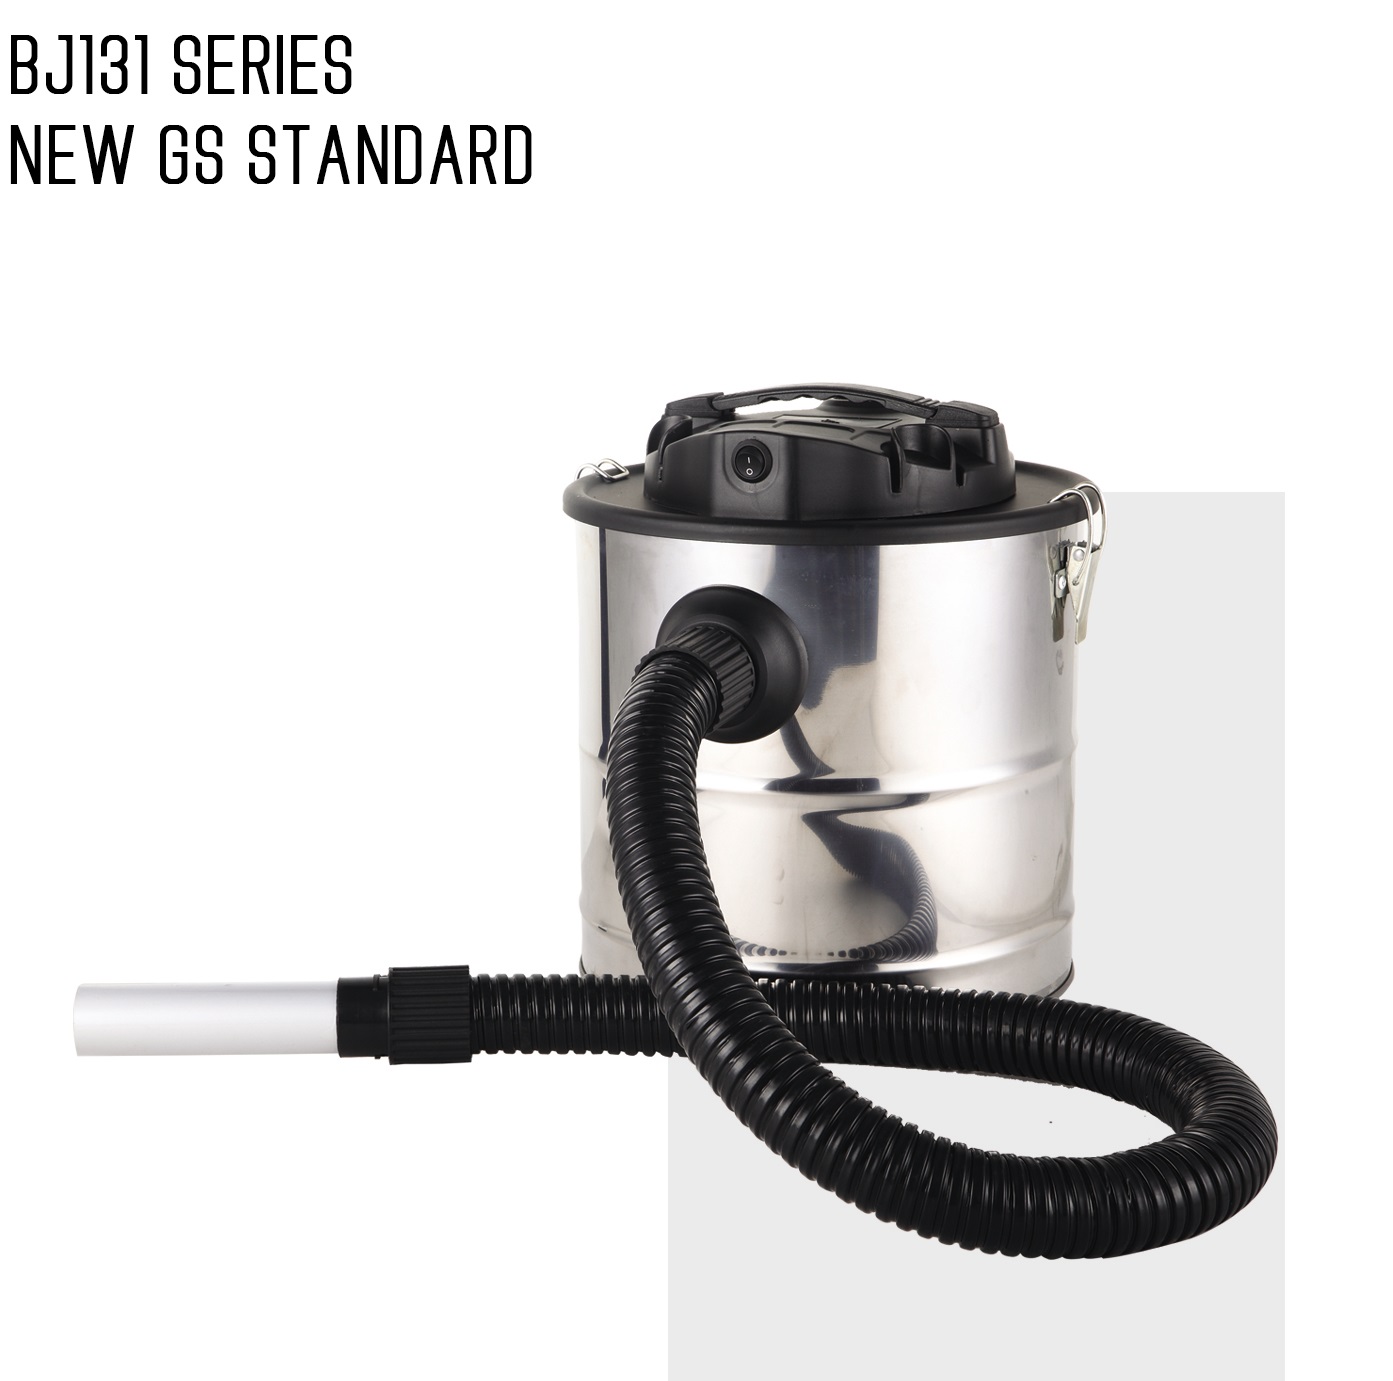 Ash Vacuum Cleaner - New GS Standard, 18L